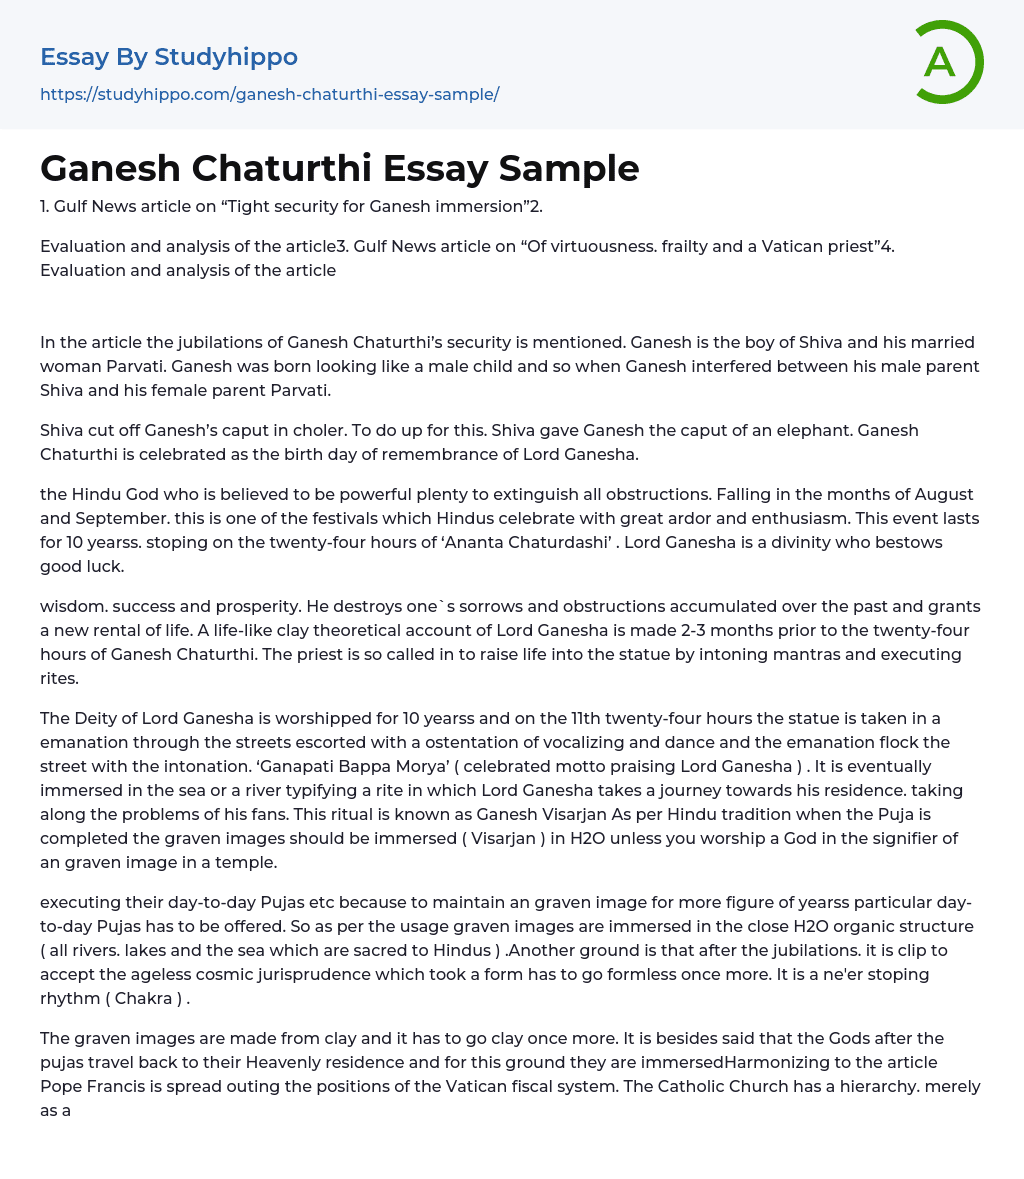 Ganesh Chaturthi Essay Sample